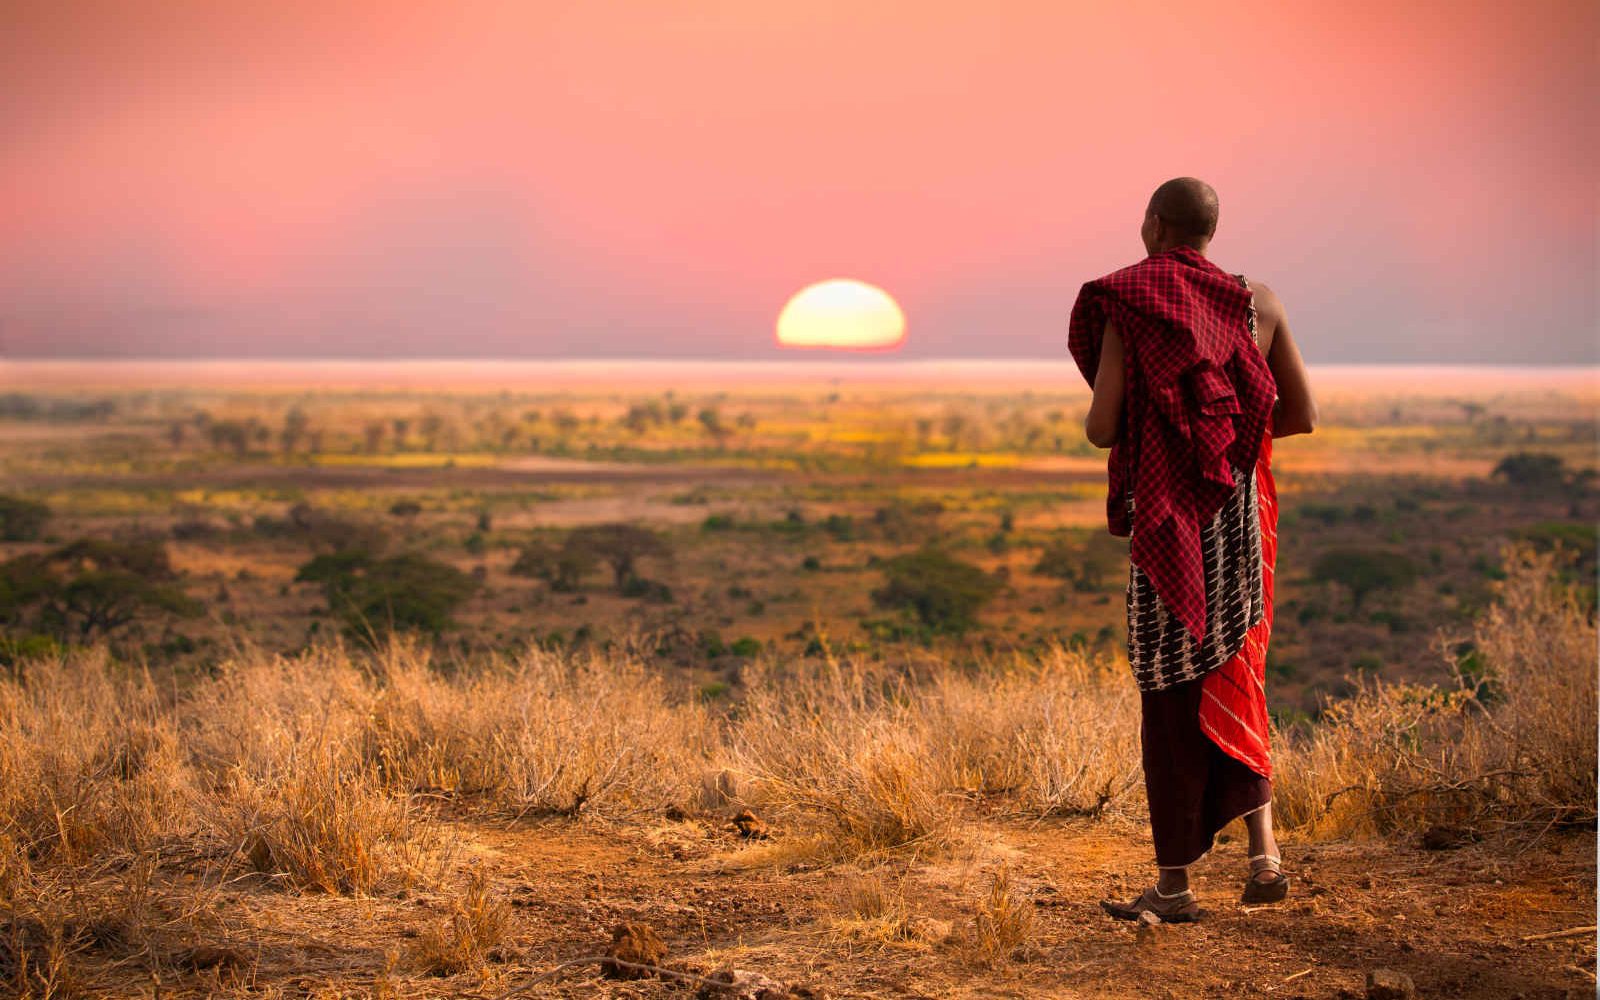 Guerrier Masai au coucher du soleil, Tanzanie